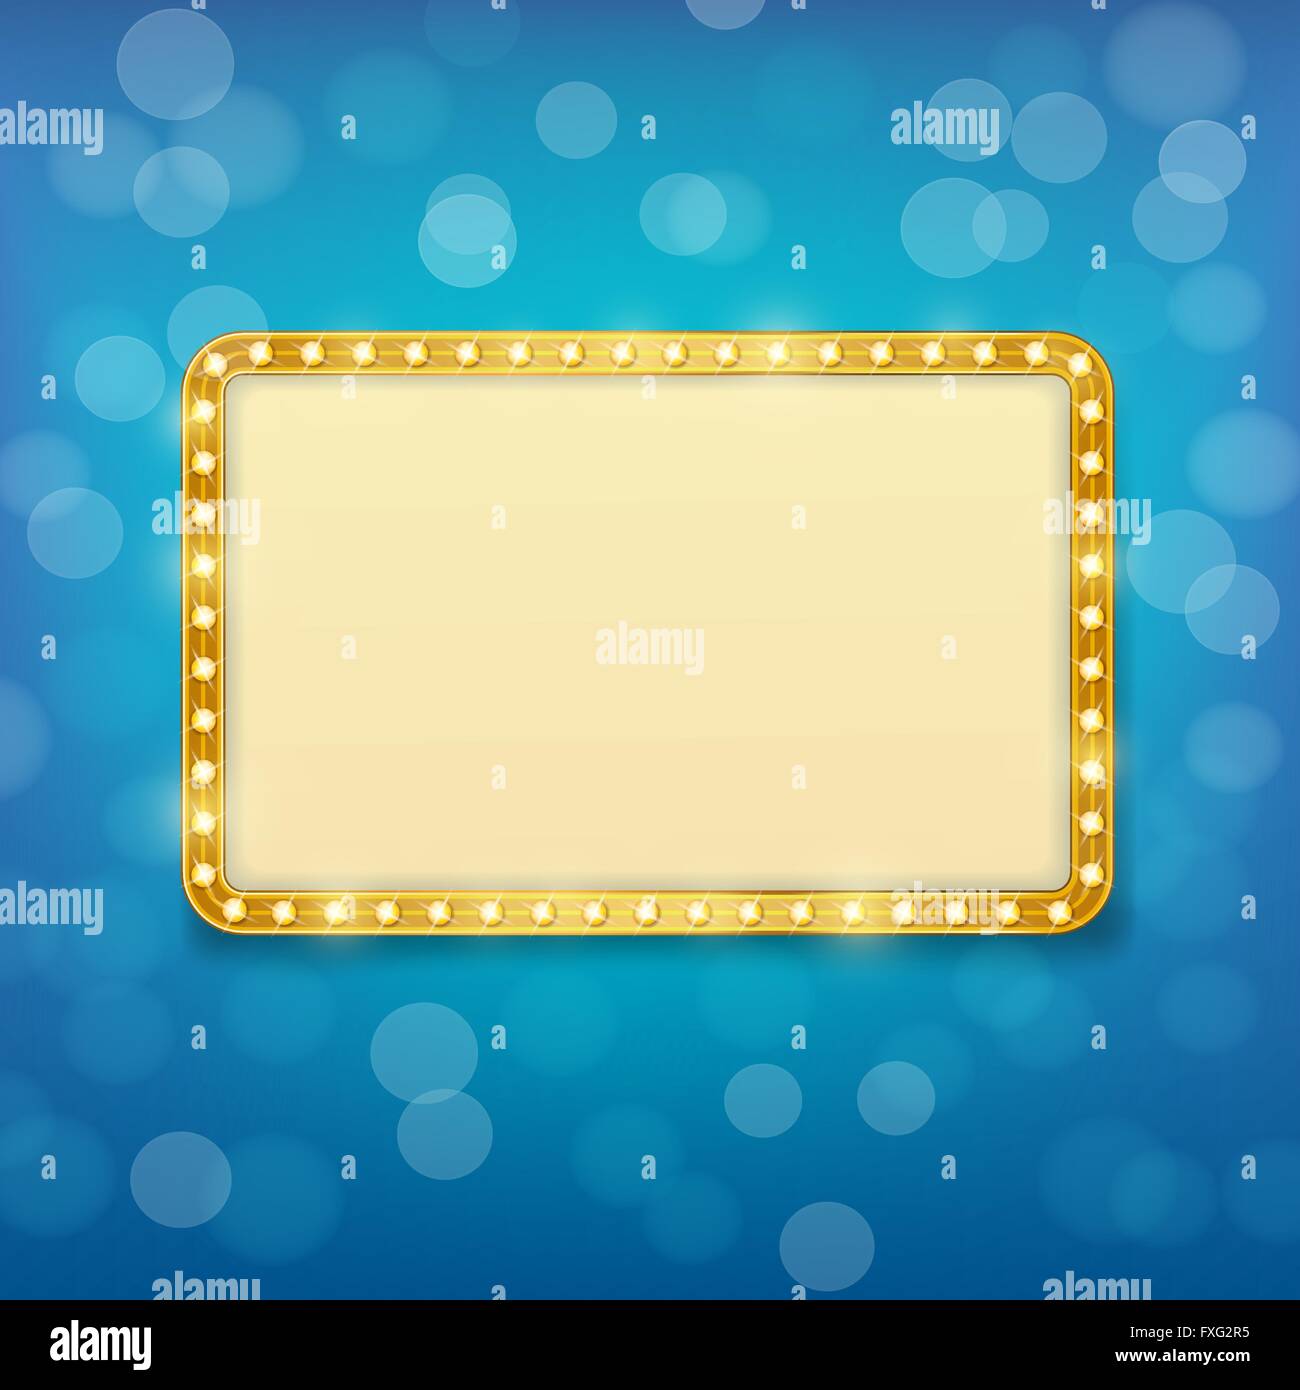 cinema golden frame with light bulbs on blurry blue background Stock Vector